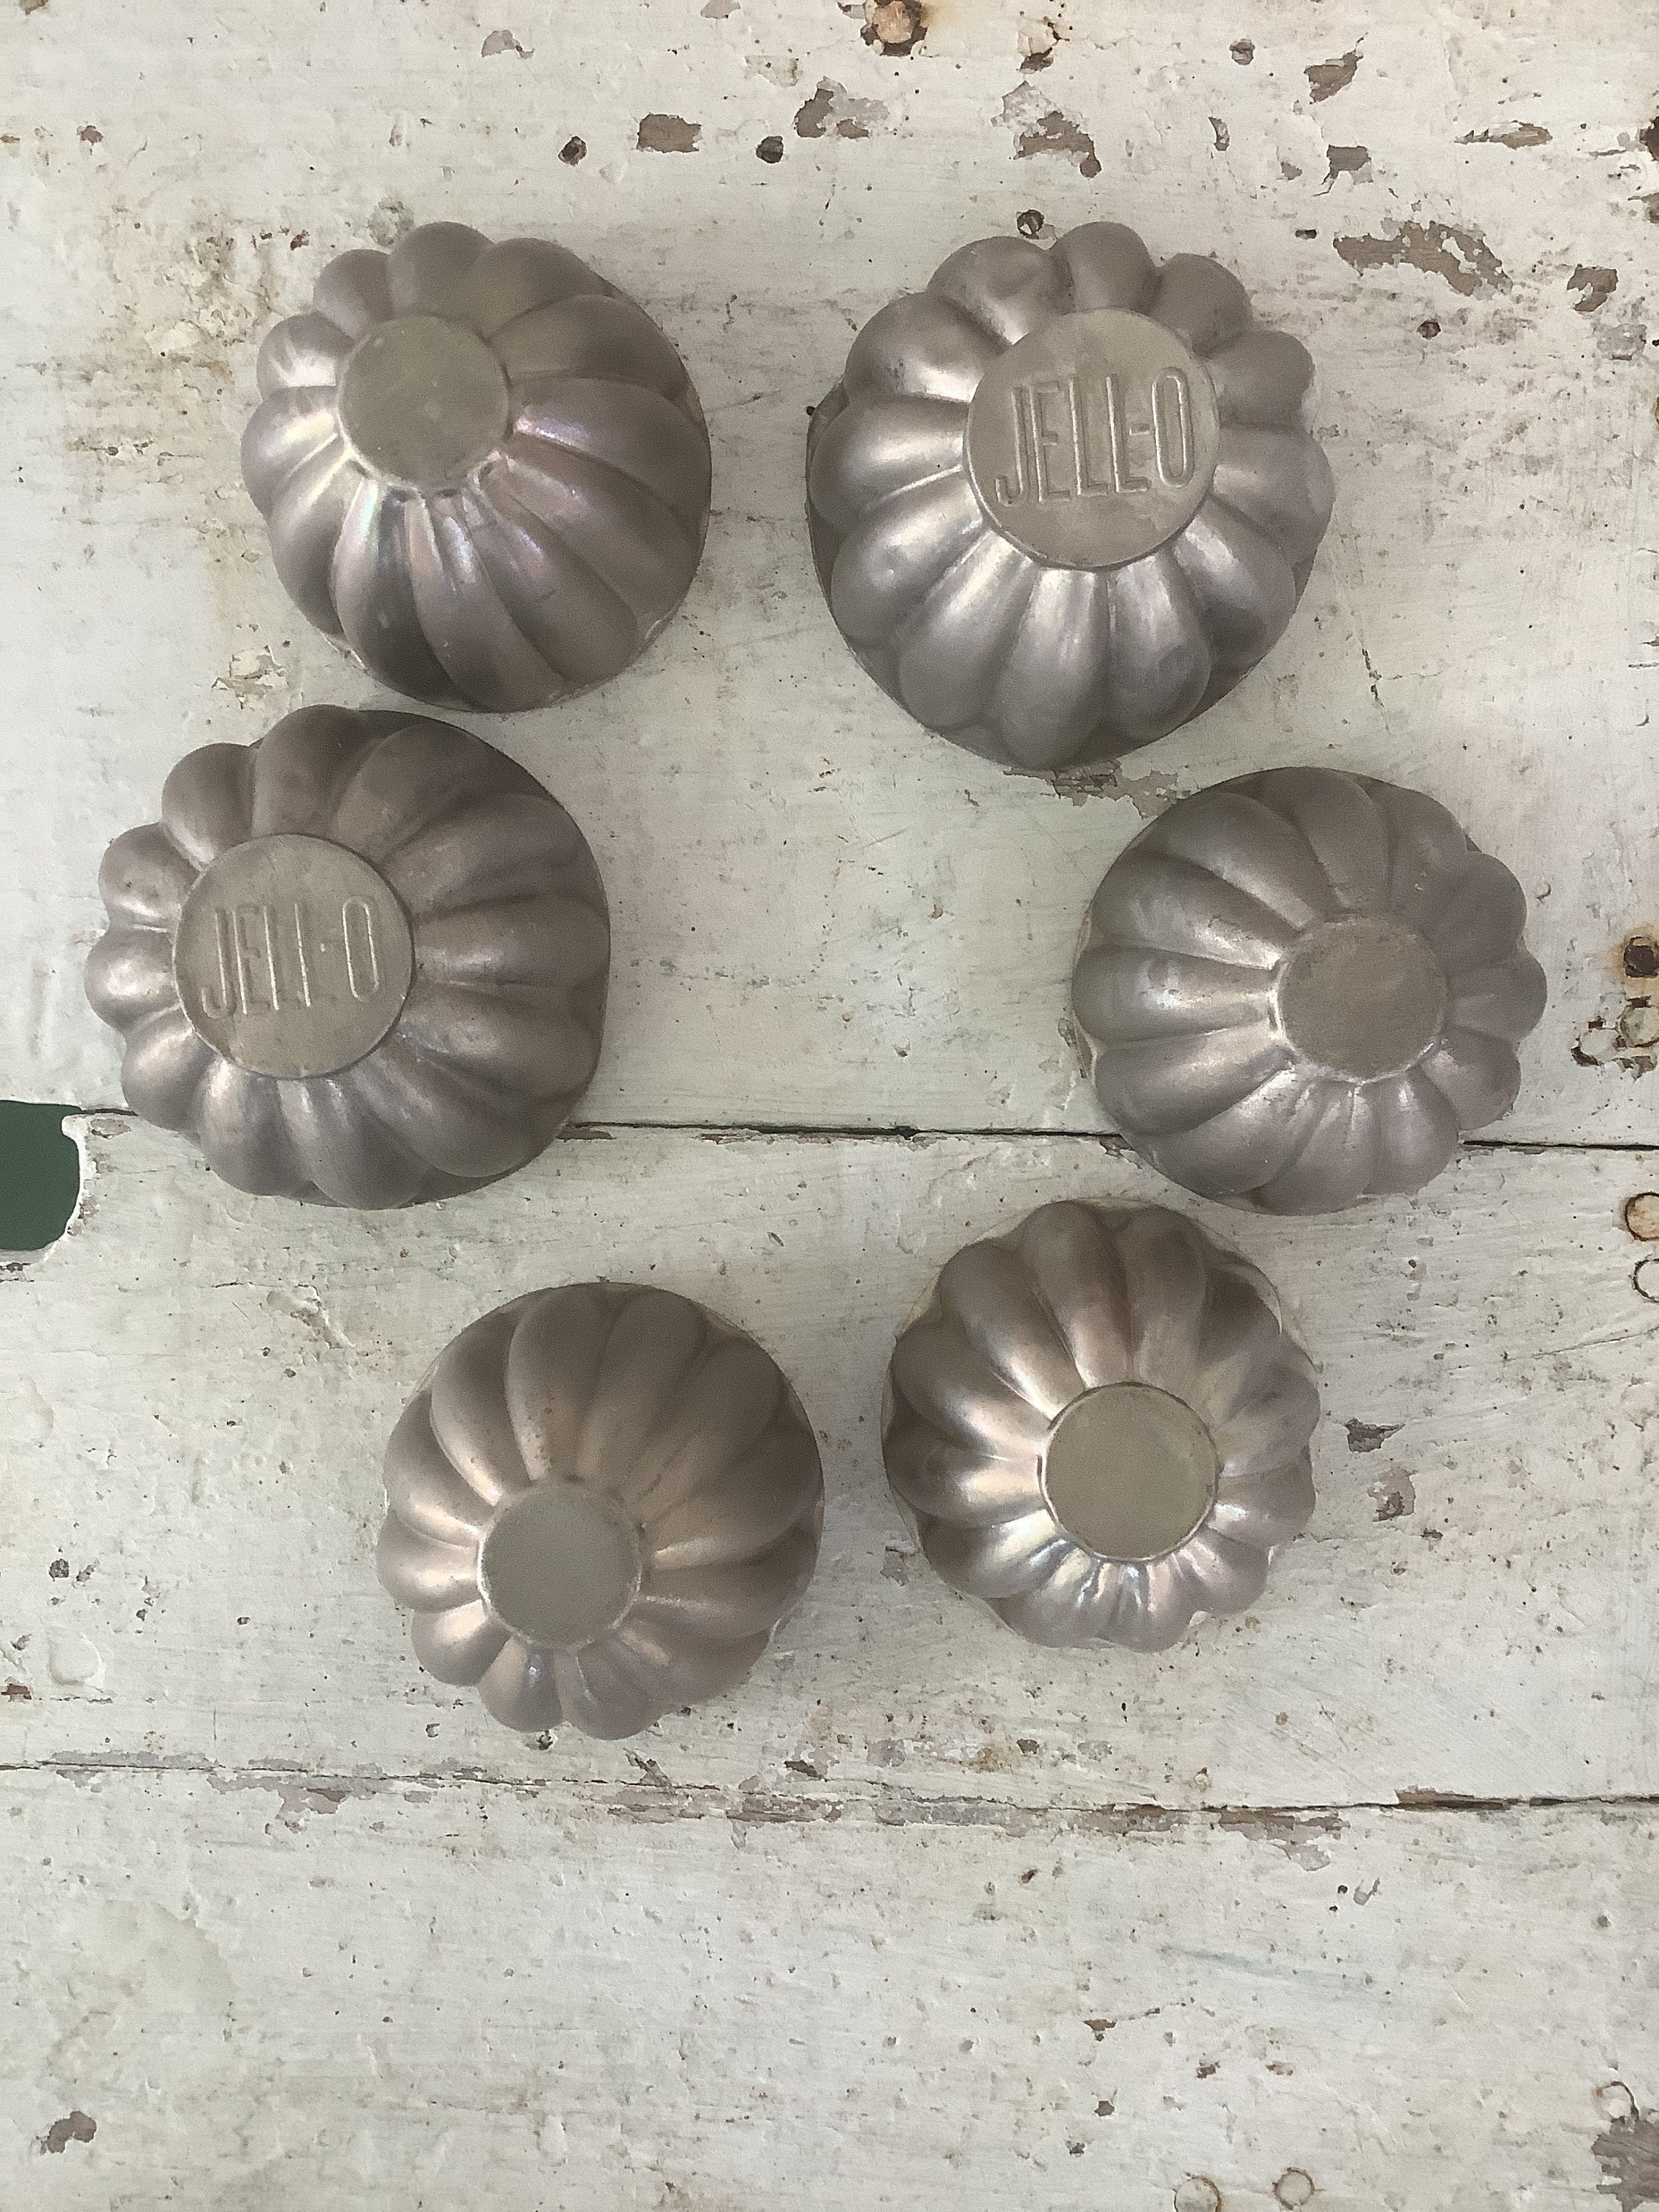 Copper Tone Aluminum Gelatin Jello Molds Set 3 of Shapes Wall Décor Vintage